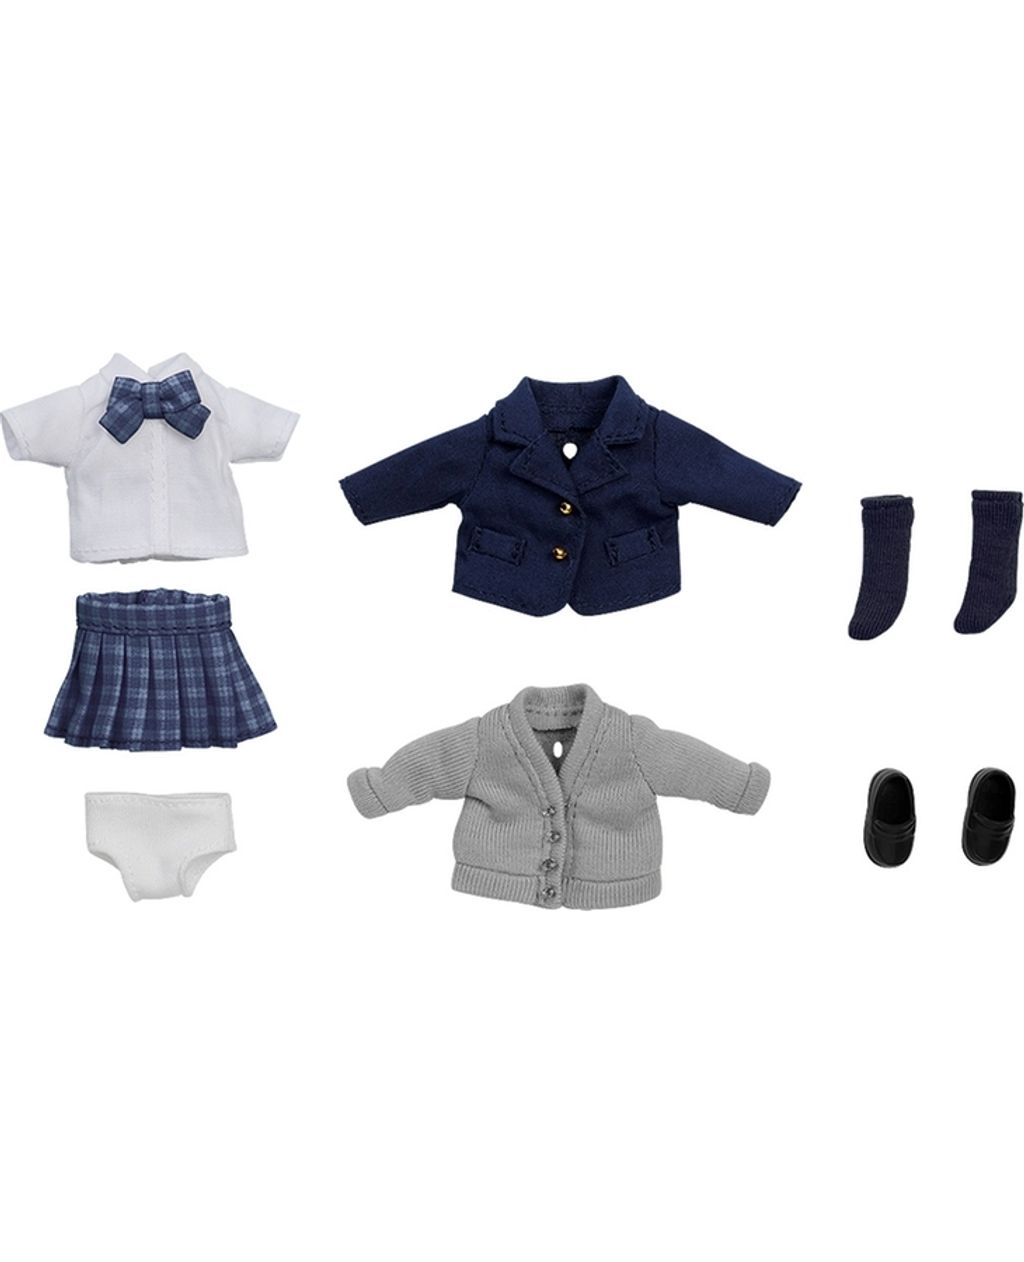 Nendoroid Doll Outfit Set- Blazer - Girl (Navy)